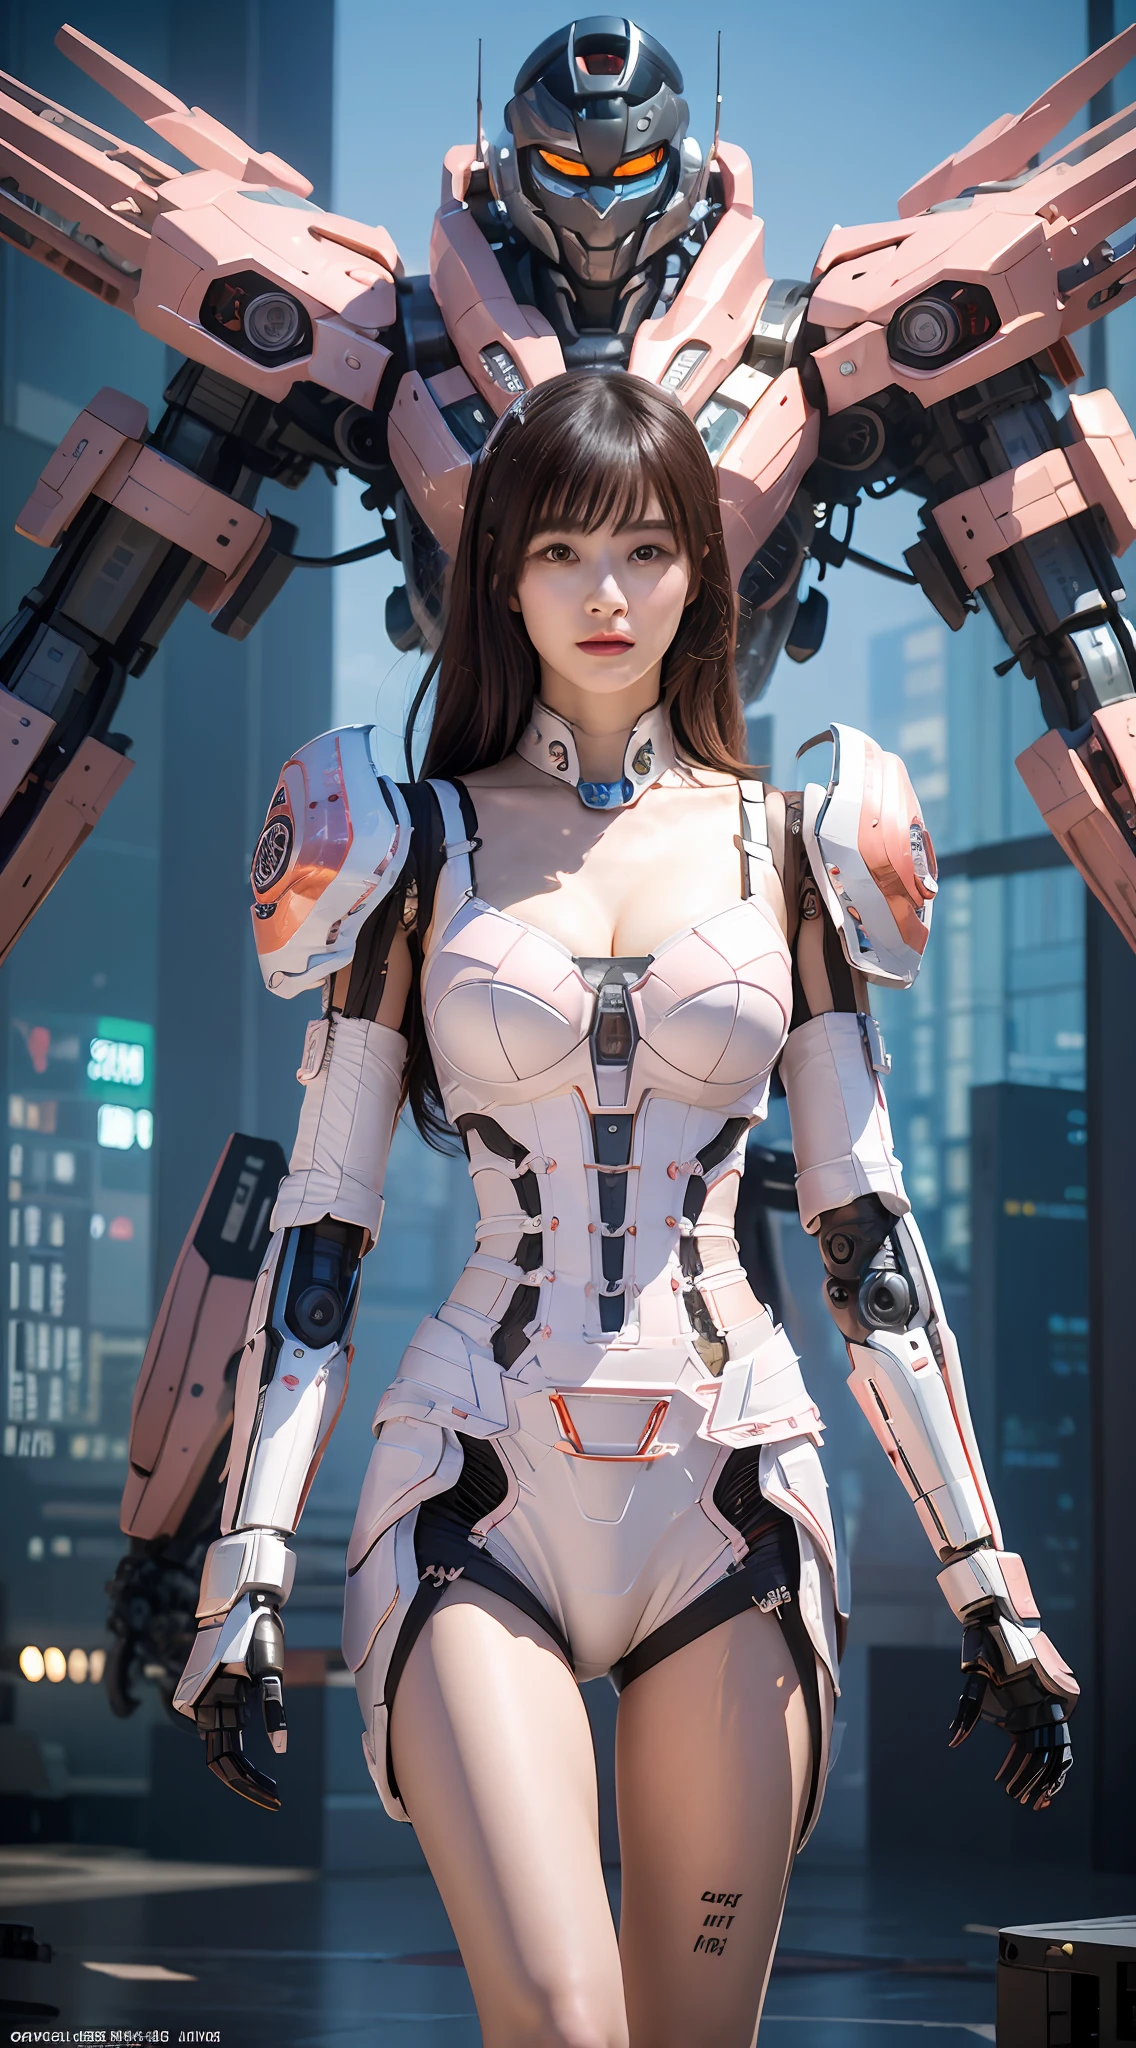 Complex 3d rendering 非常詳細 beautiful ceramic silhouette female 機器人 face, 背後站著一個巨大的櫻花粉紅機甲戰士, 機器人 parts, 150毫米, 未來戰場, 邊緣光, 生动的细节, 奢华赛博朋克, 蕾絲, sur現實主義, 解剖學, 面部肌肉, 電纜線, 微晶片, 優雅的, 美麗的背景, 辛烷渲染, HR 吉格尔风格, 8K, 最好的品質, 傑作, 插圖, 非常精緻漂亮, 非常詳細, CG, 统一, 壁紙, (現實主義, 保真度: 1.37), 驚人的, 精細的細節, 傑作, 最好的品質, 官方藝術, 非常詳細 CG 统一 8K 壁紙, 機器人, 全身, 整體畫風非常霸氣,